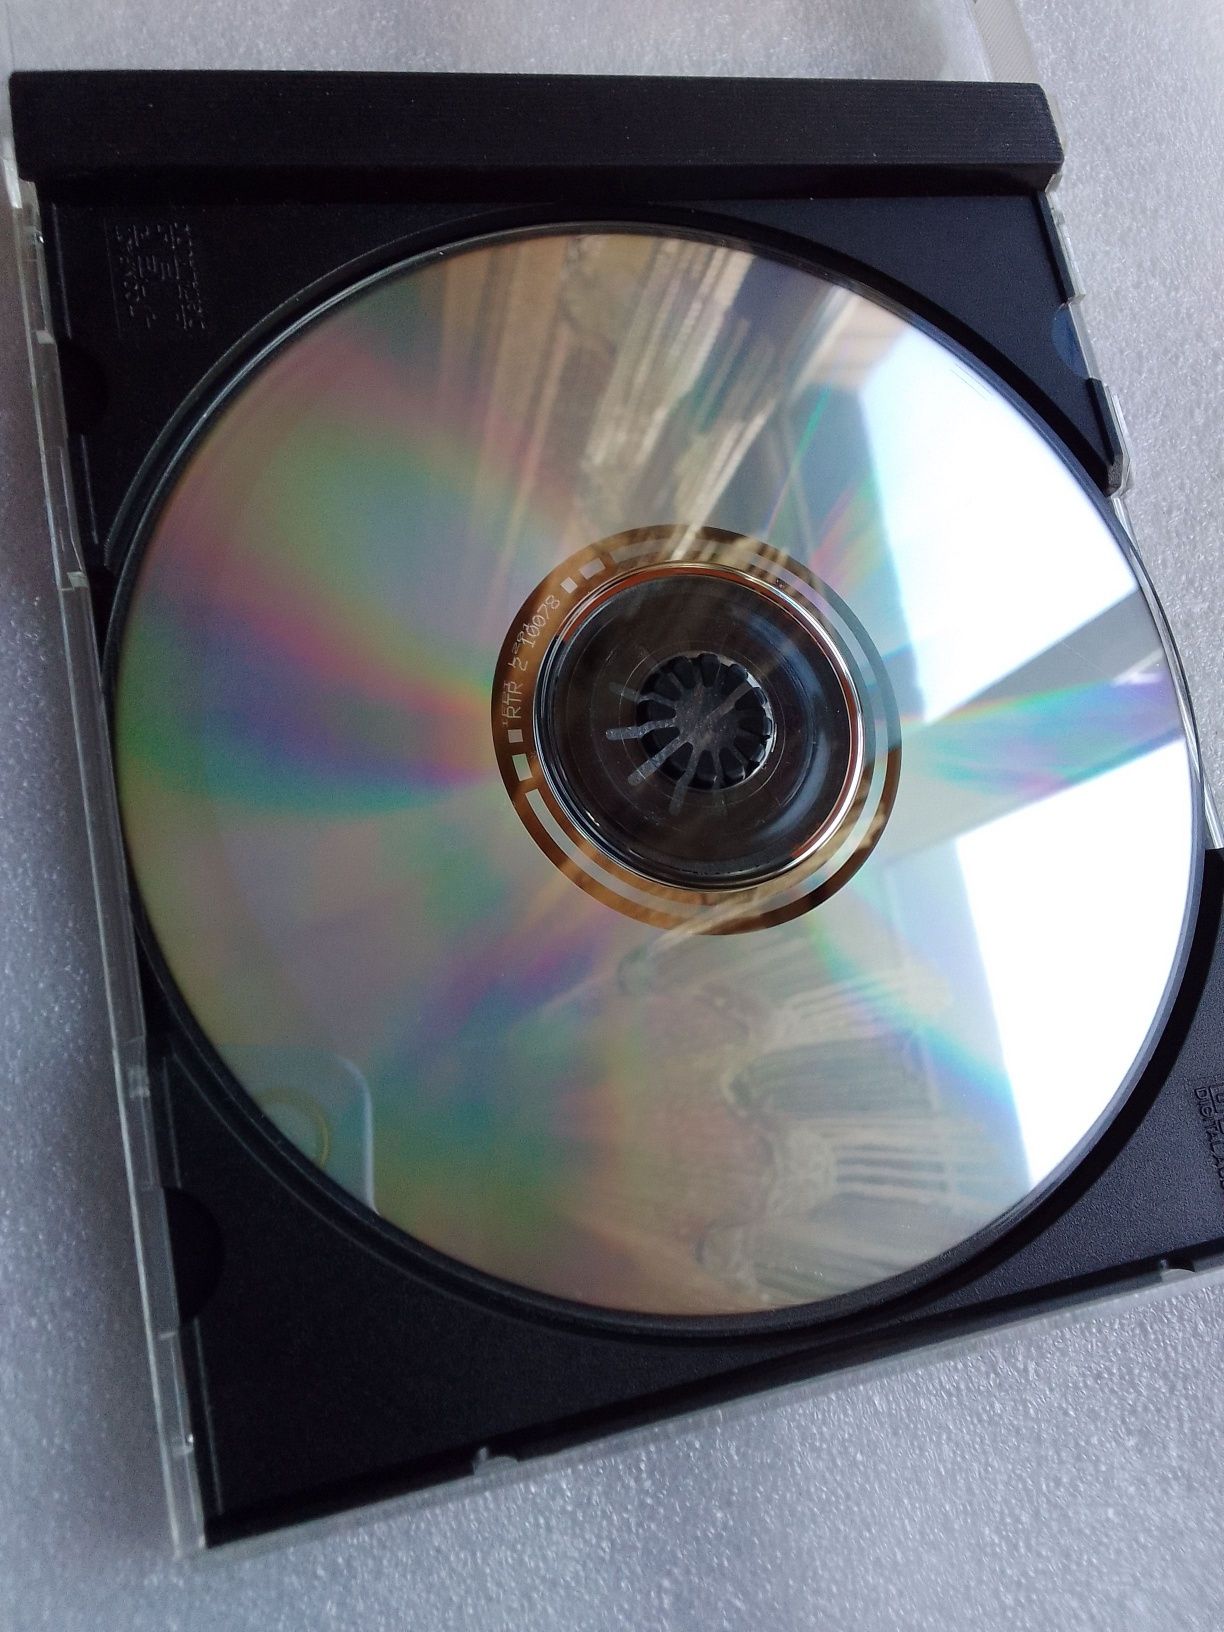 BACHMAN-TURNER "Overdriver". CD Audio.